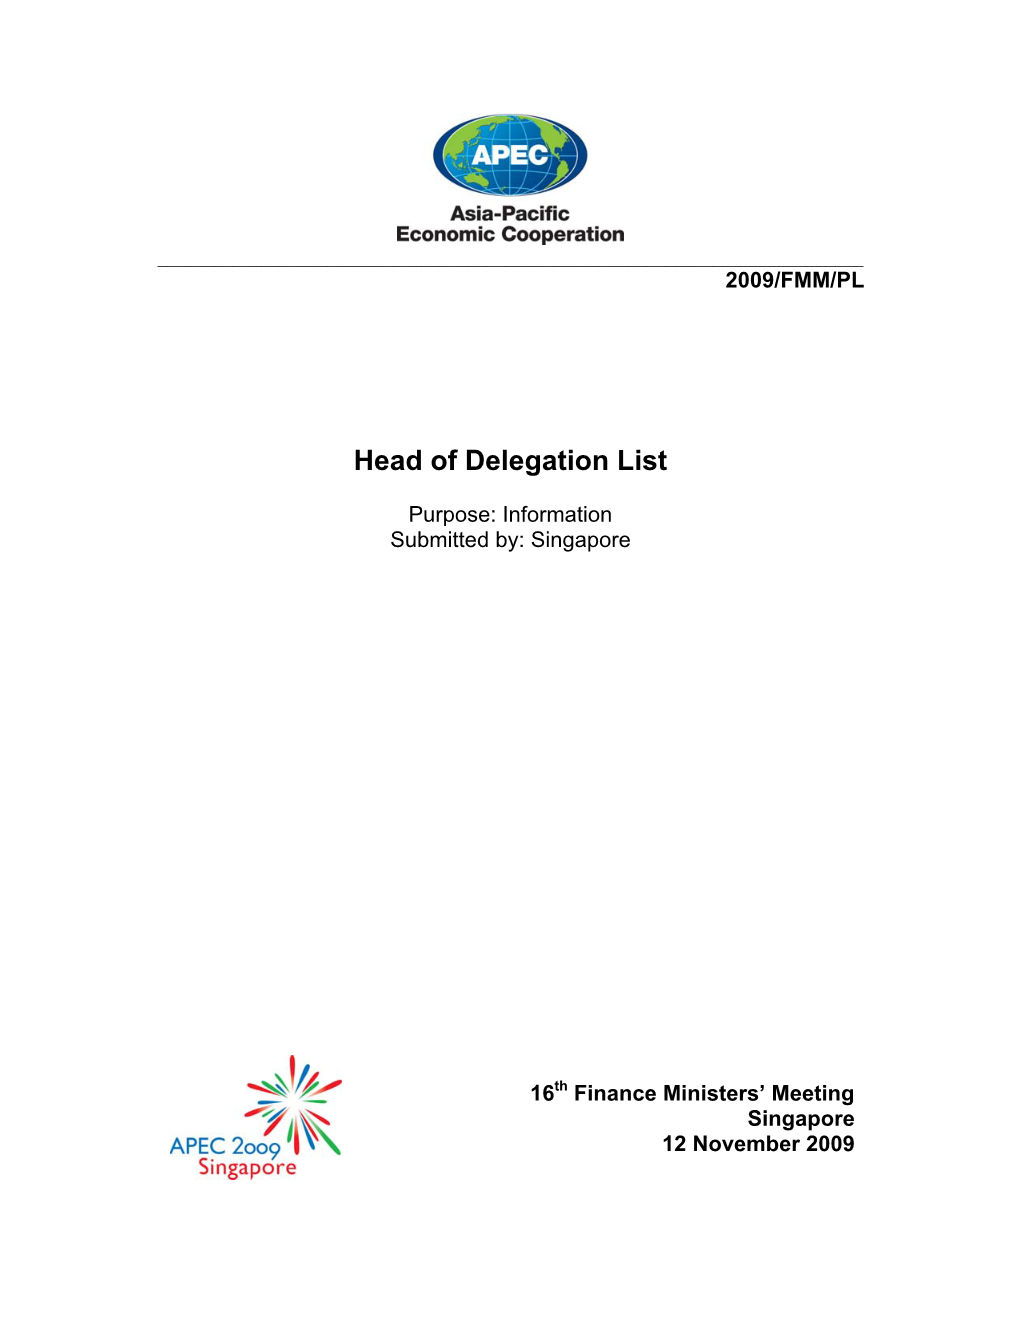 Head of Delegation List